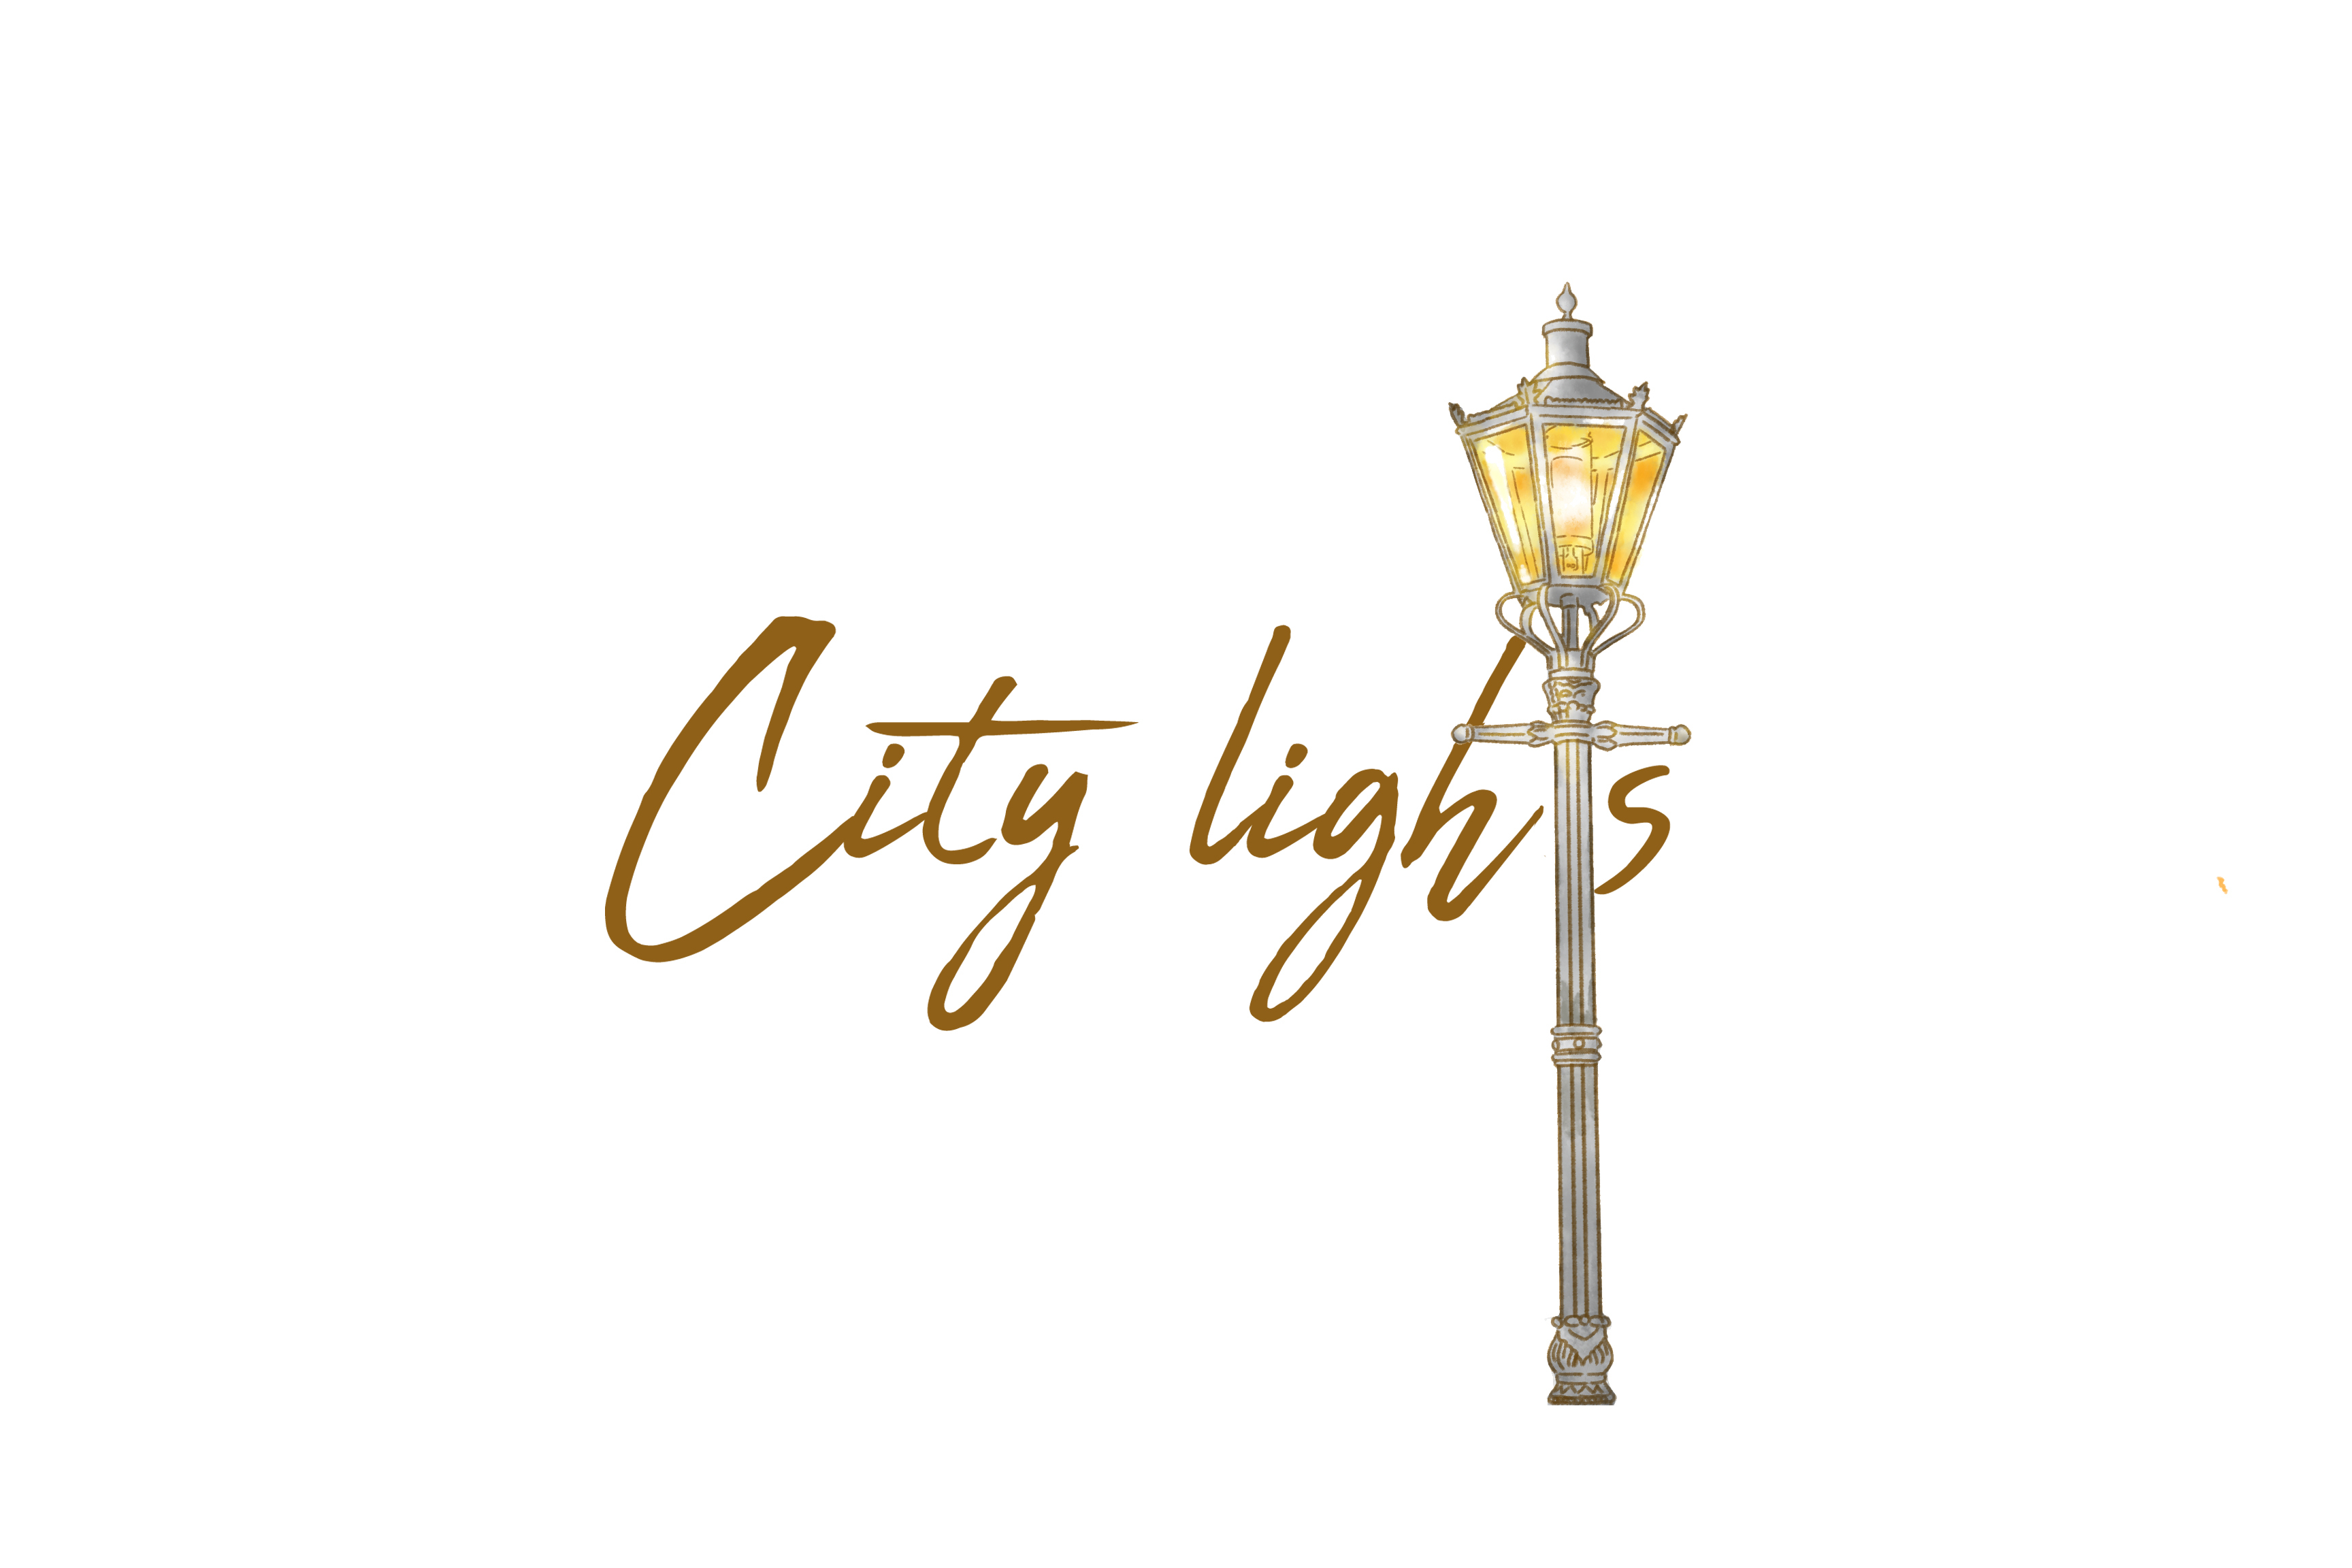 City lights-街の灯り-